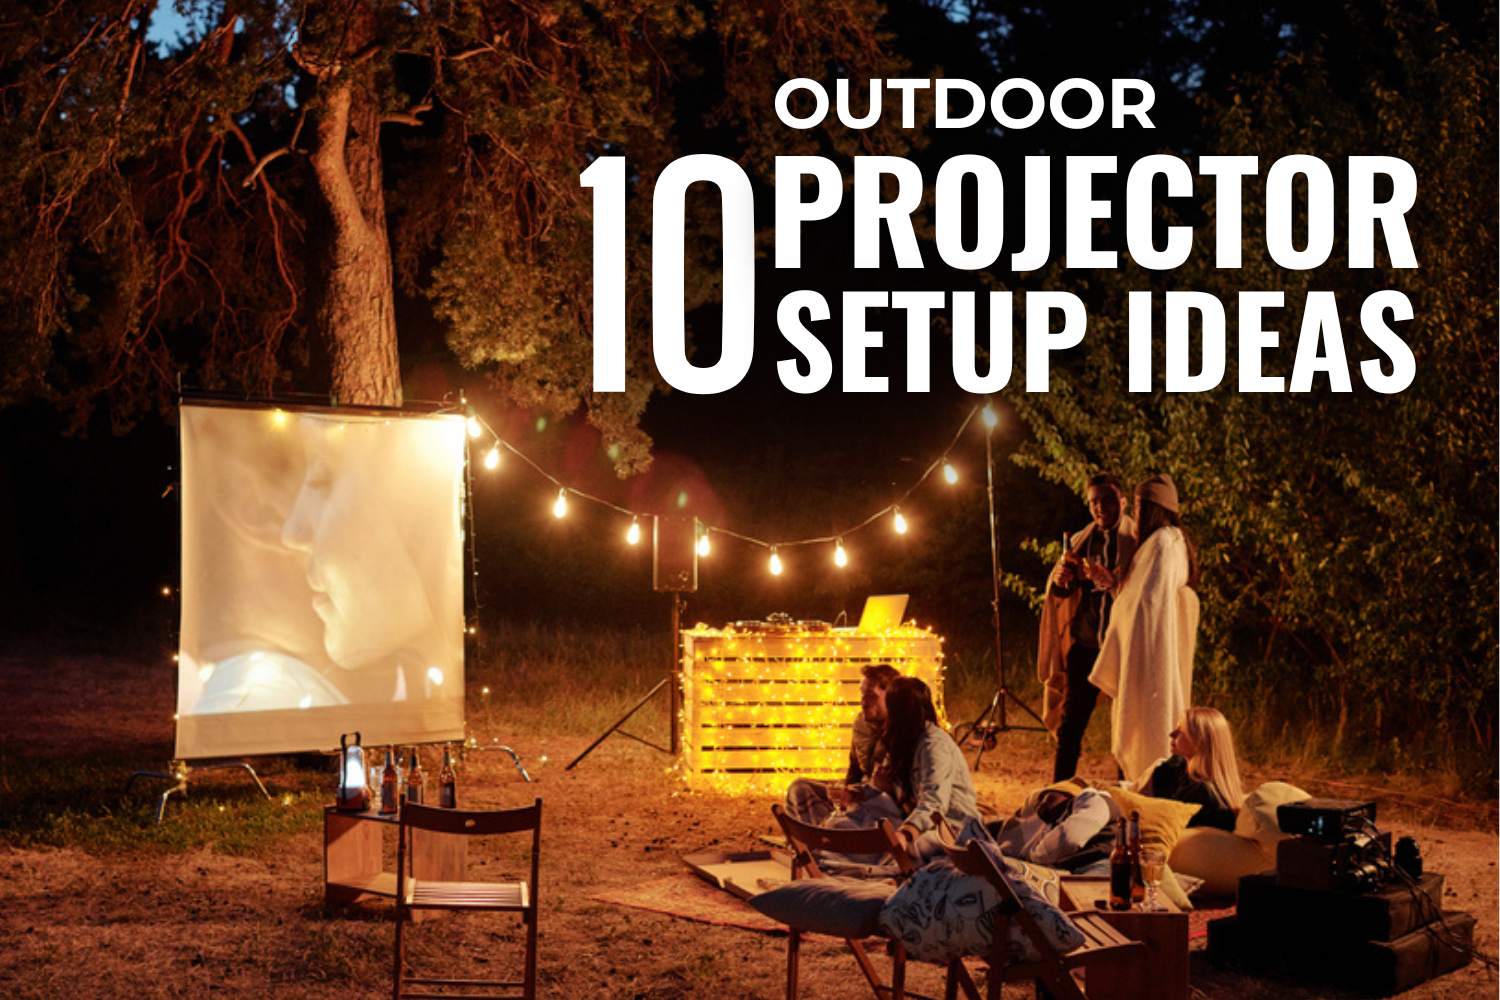 10 outdoor projector setup ideas